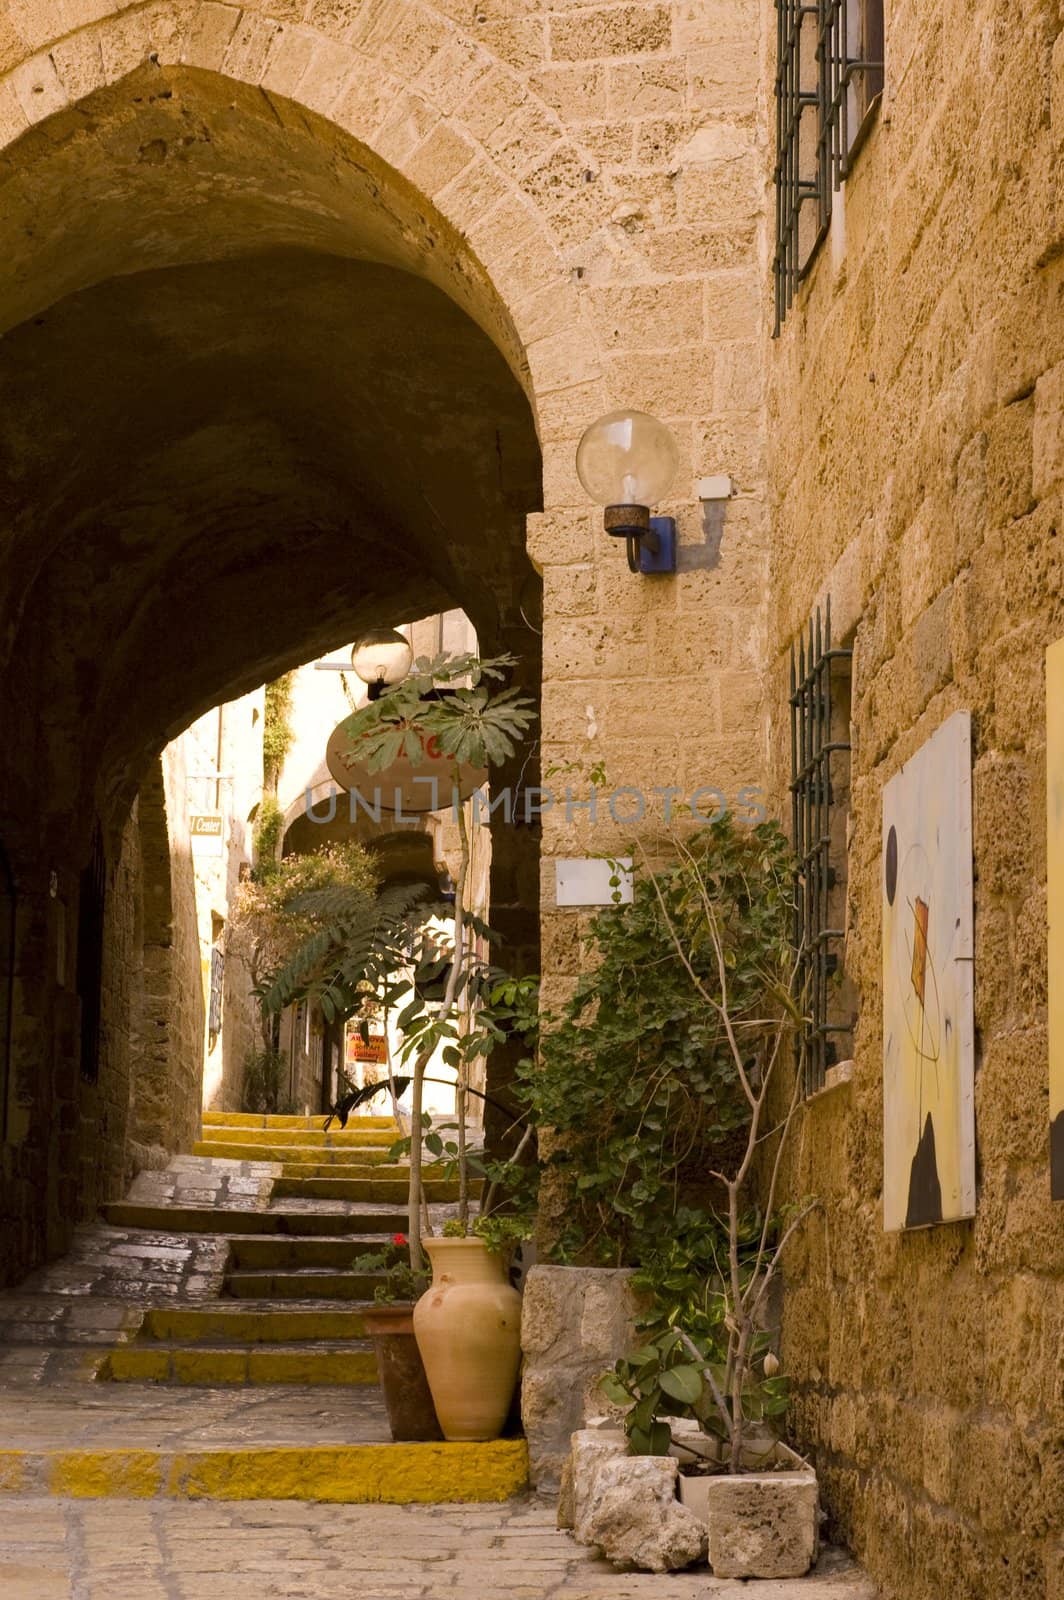 Narrow Street In Old City Of Jaffa. Israel.